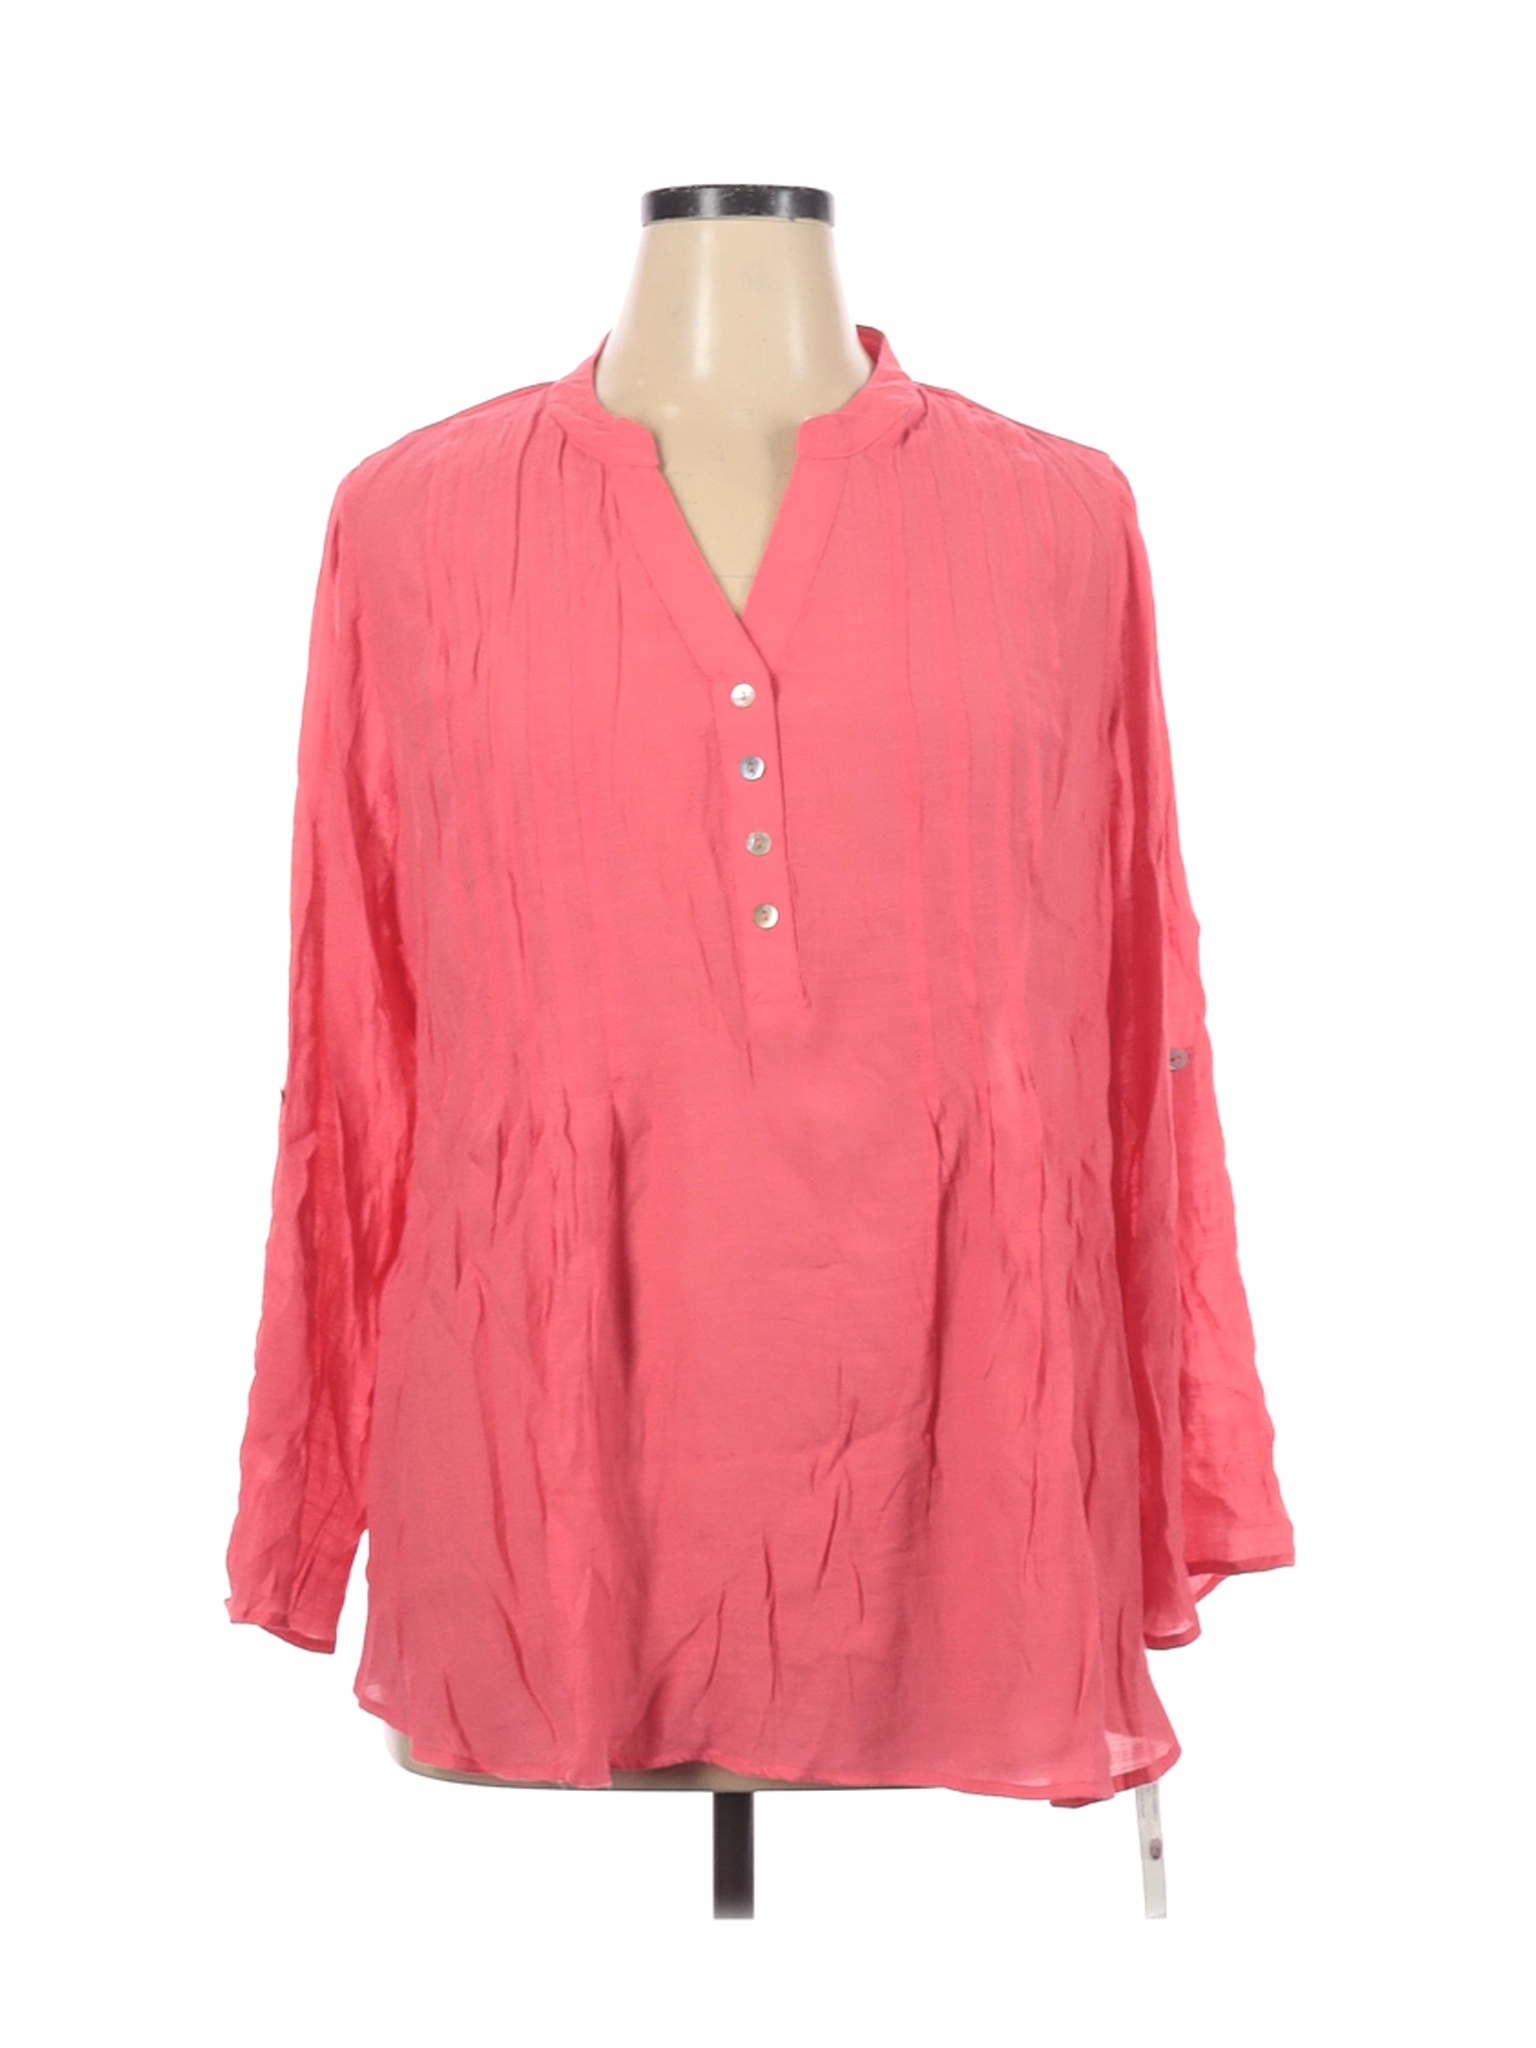 NWT Zac & Rachel Women Pink Long Sleeve Blouse 1X Plus | eBay